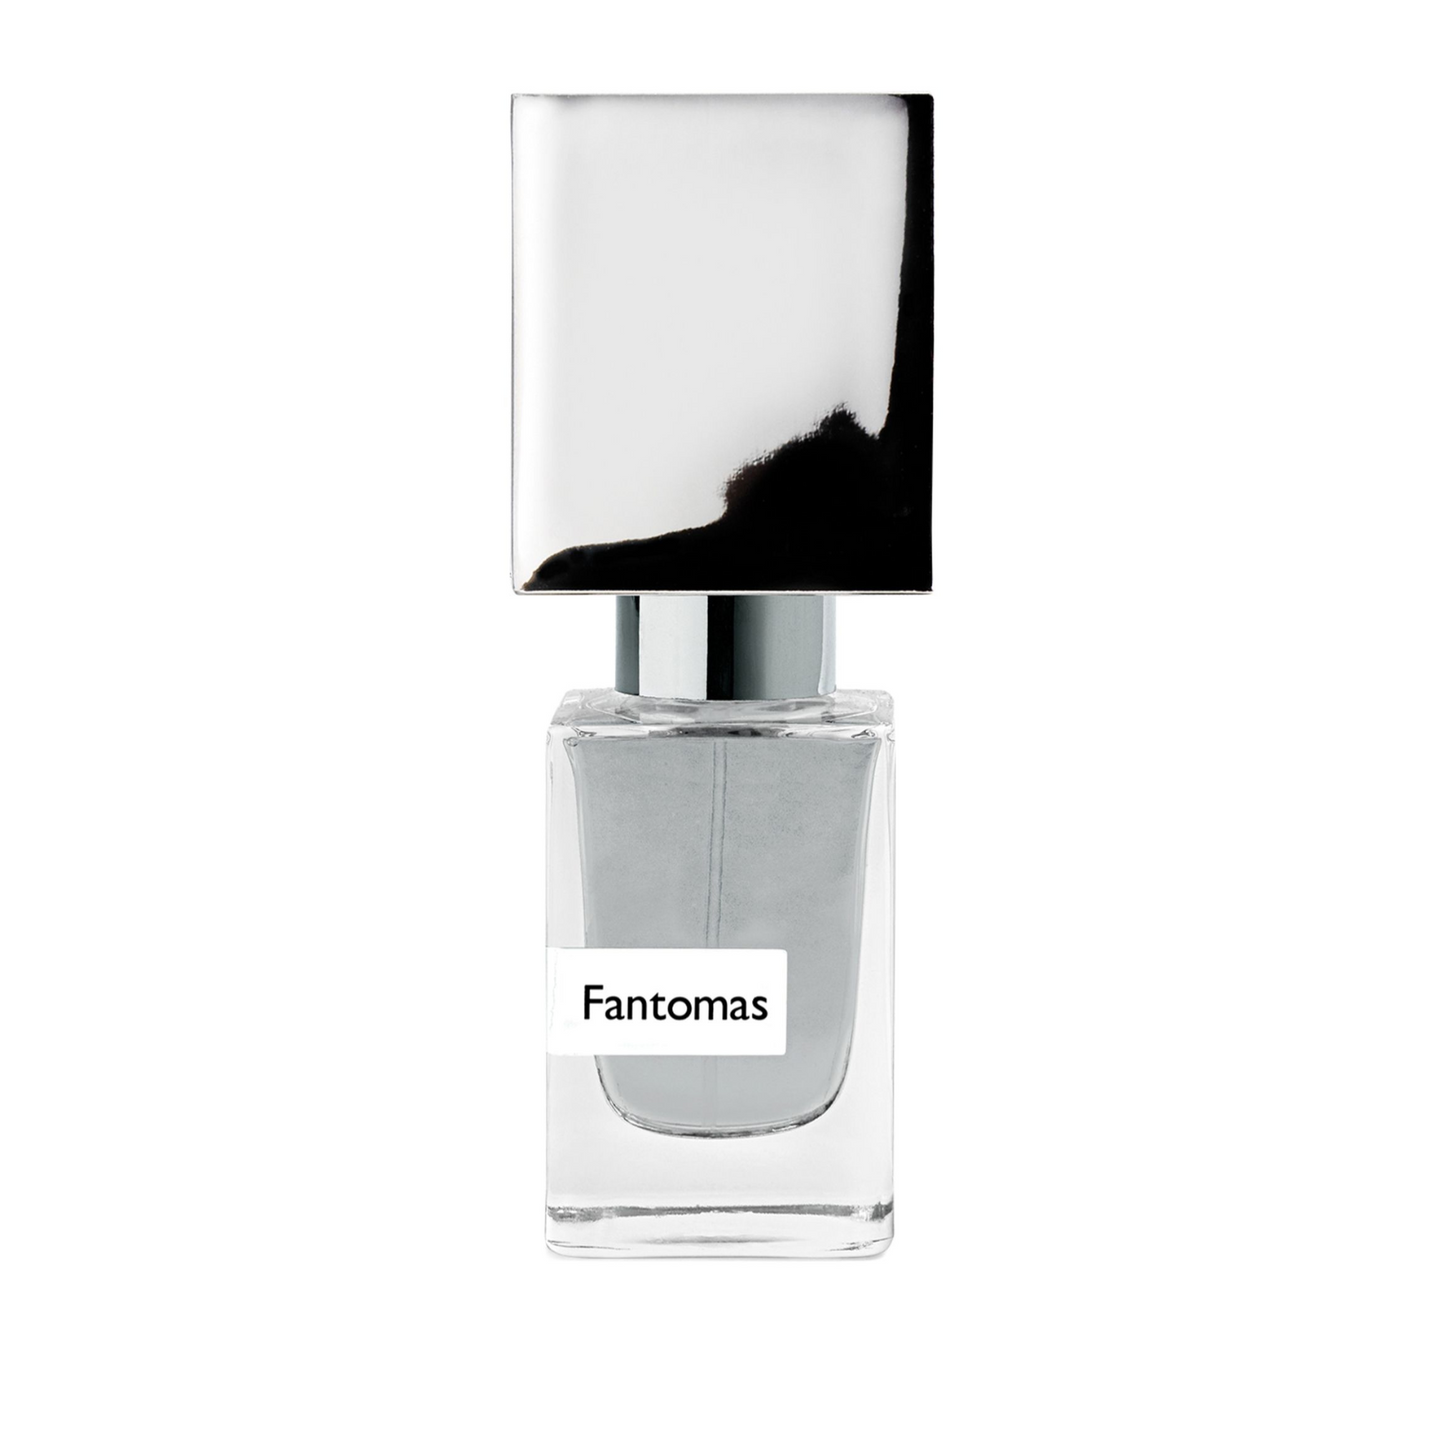 Primary Image of Nasomatto Fantomas Extrait de Parfum (30 ml) 